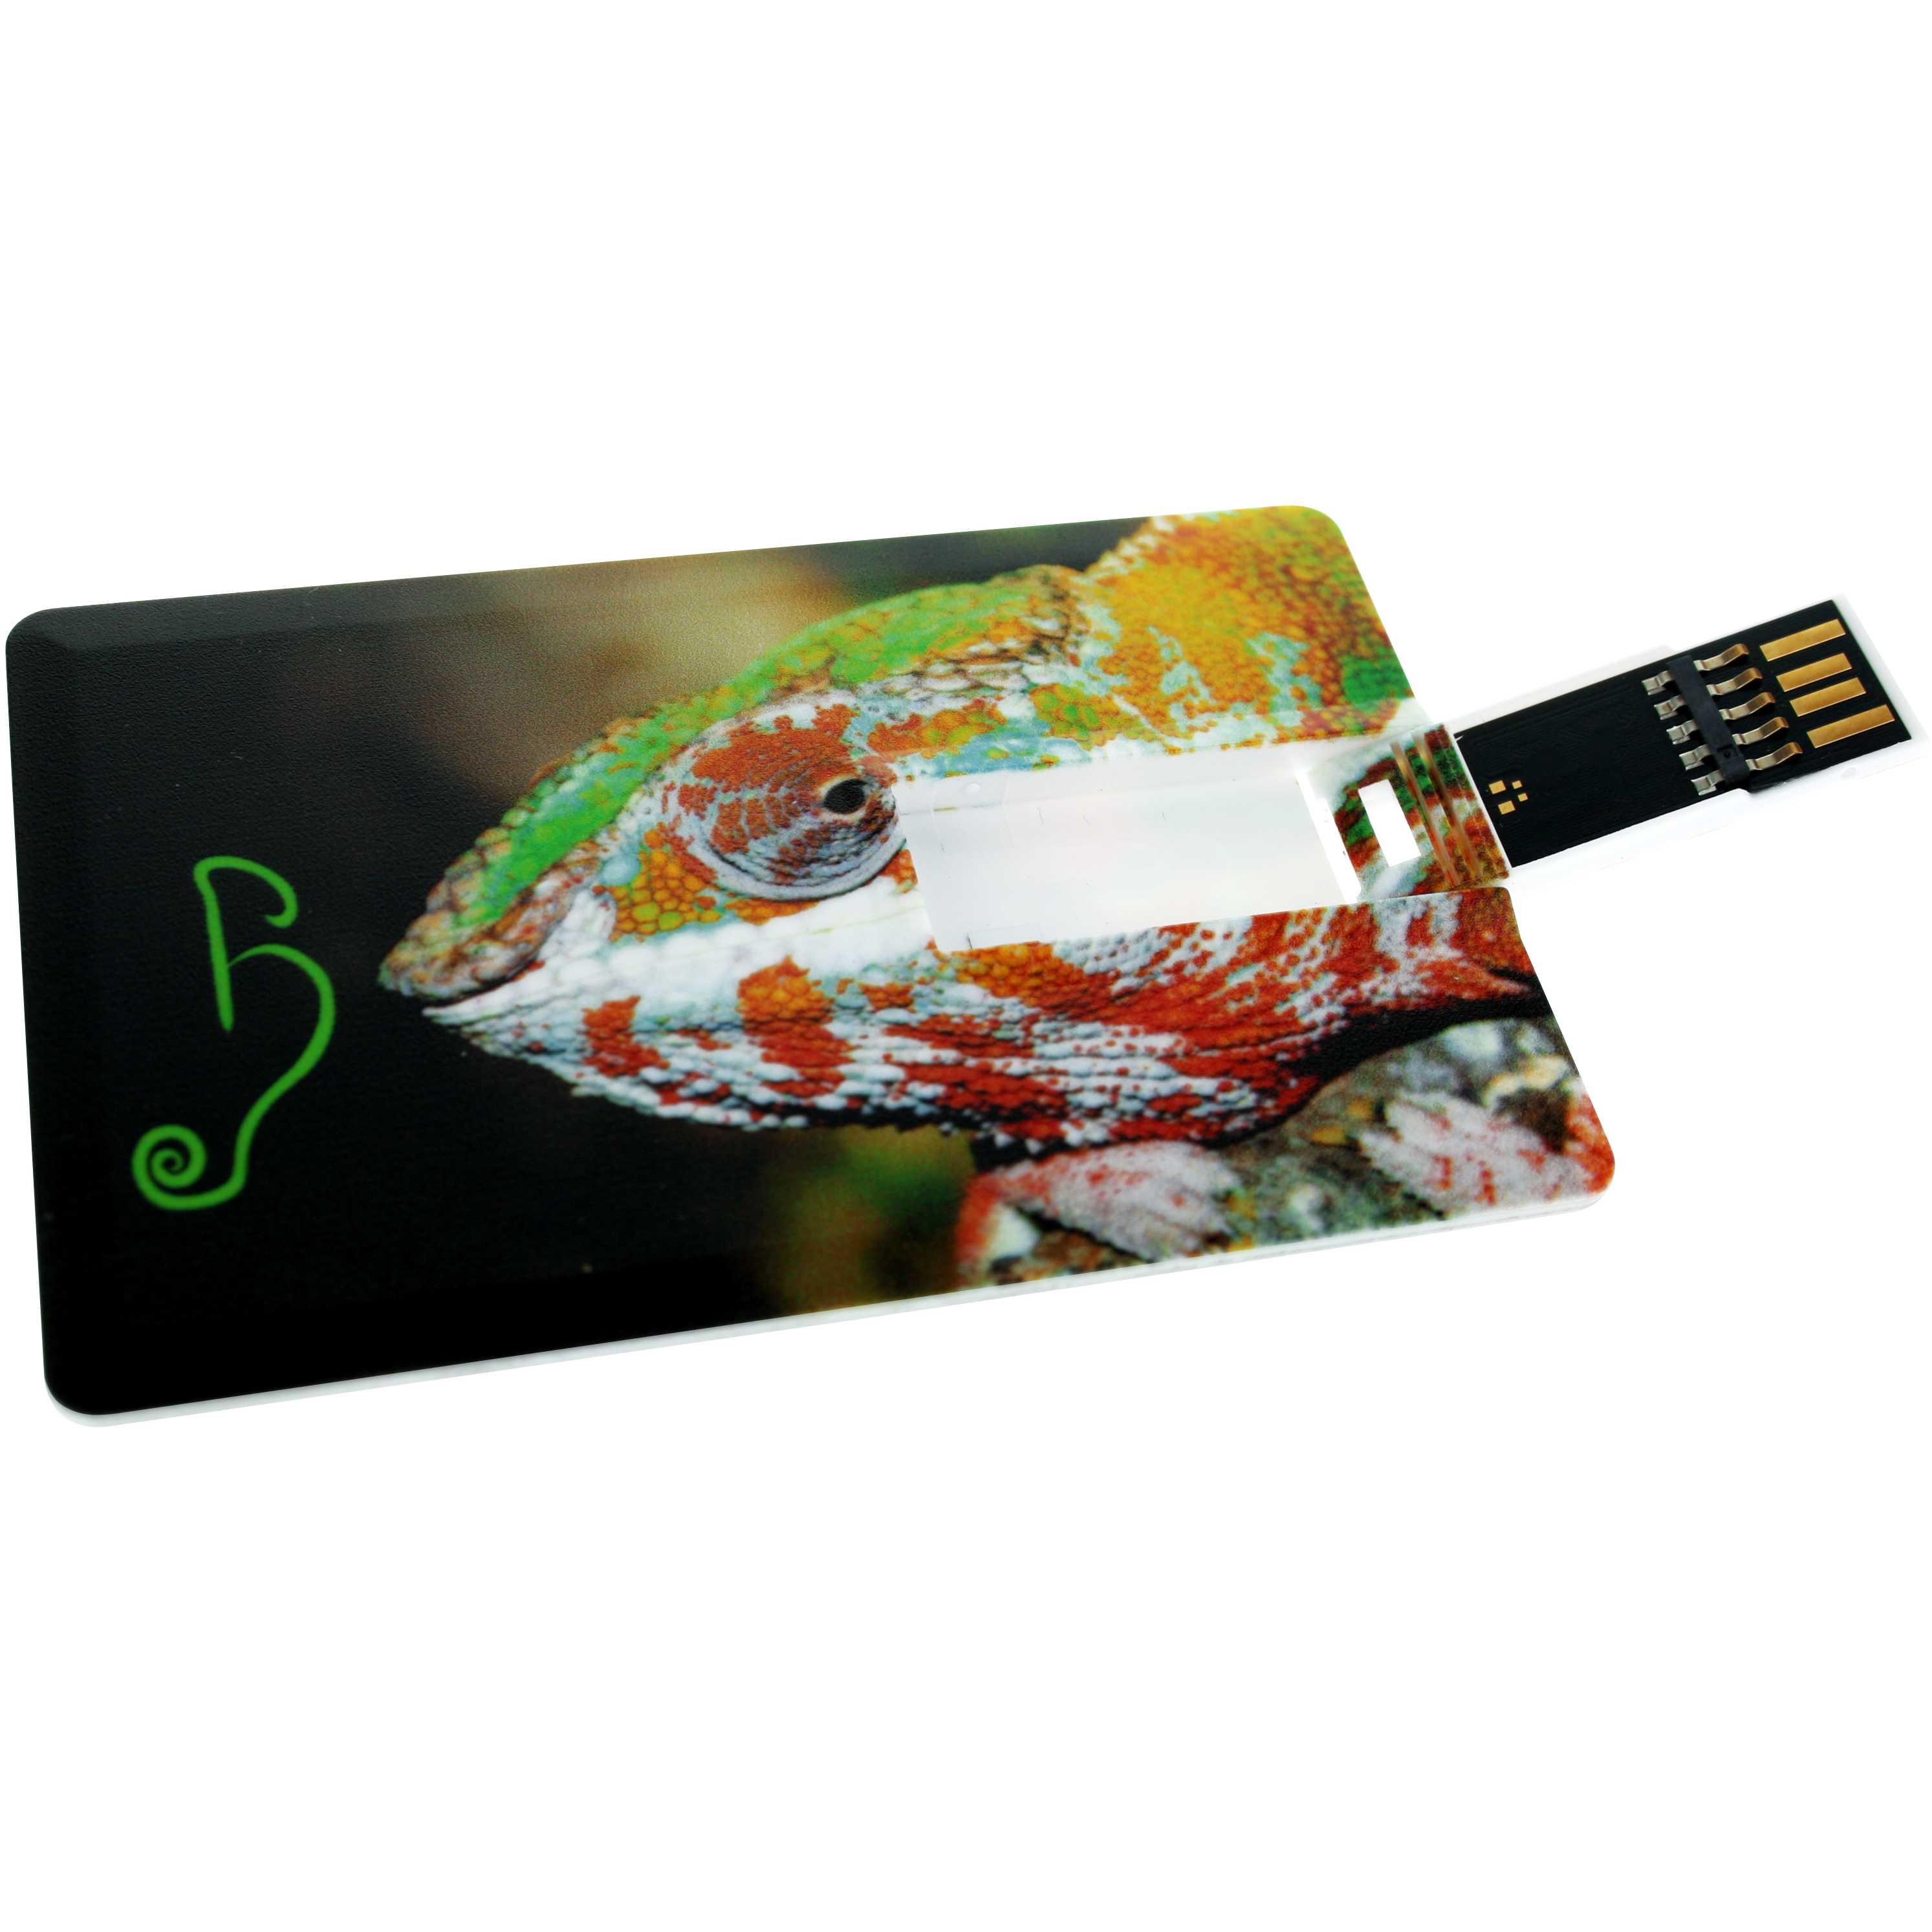 USB Credit Card 3.0